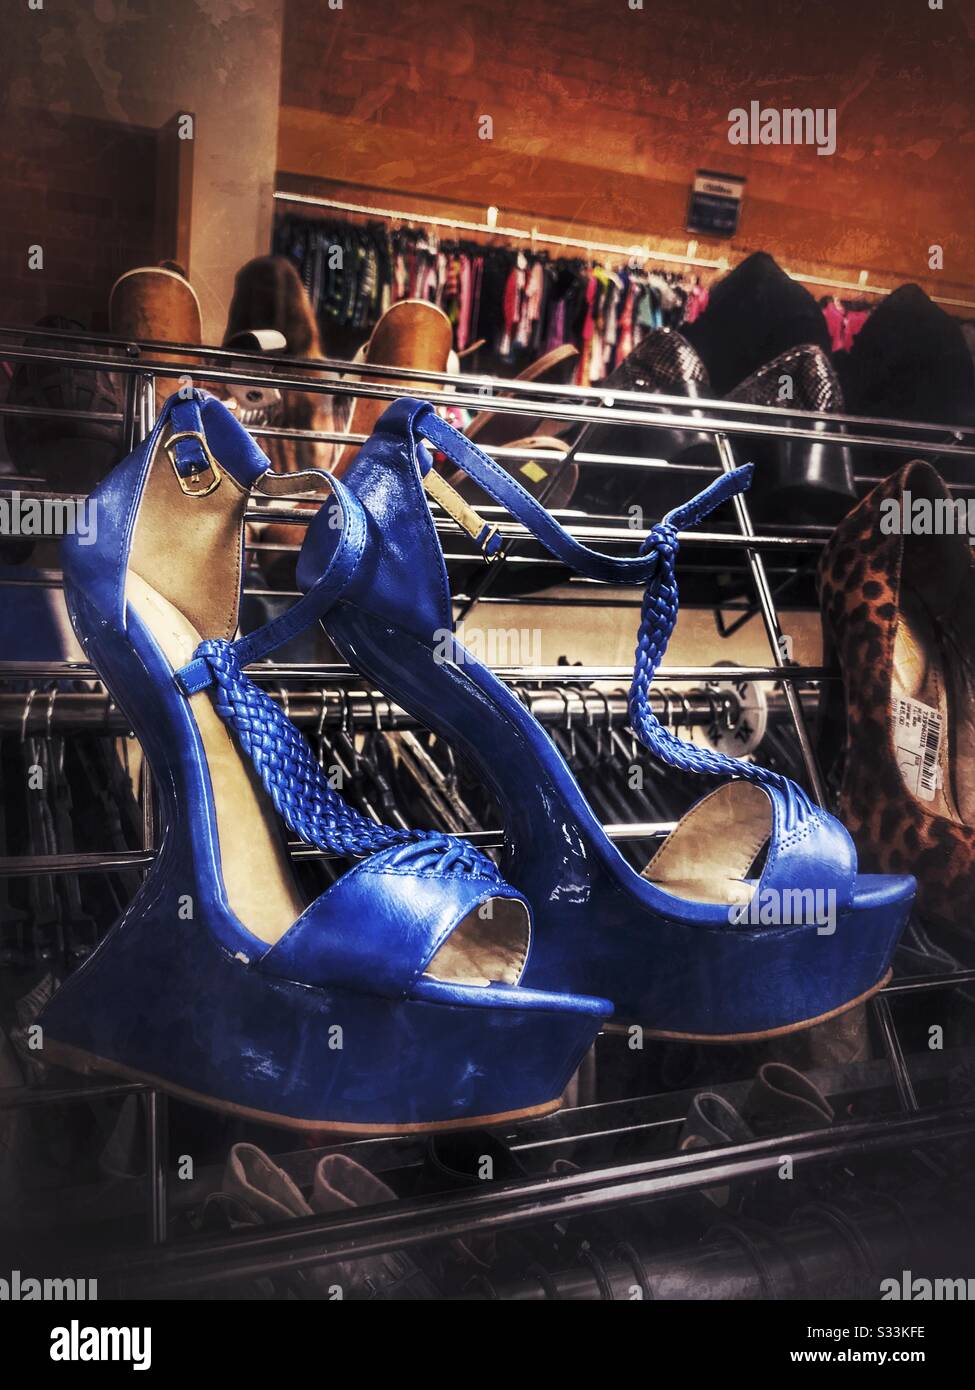 Grunge photo of women’s odd blue platform sandals on display in thrift shop Stock Photo